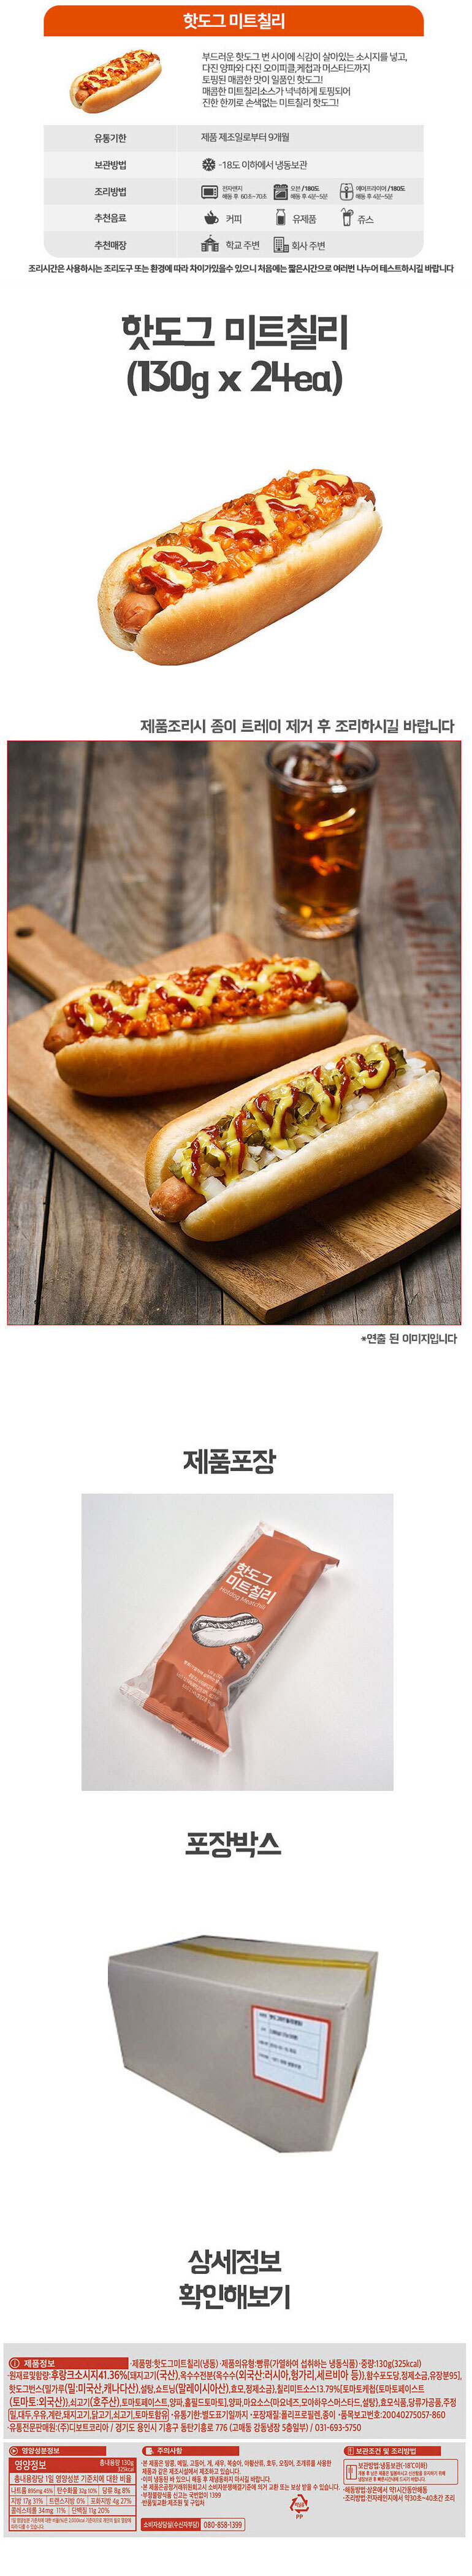 hotdog_meatchilly